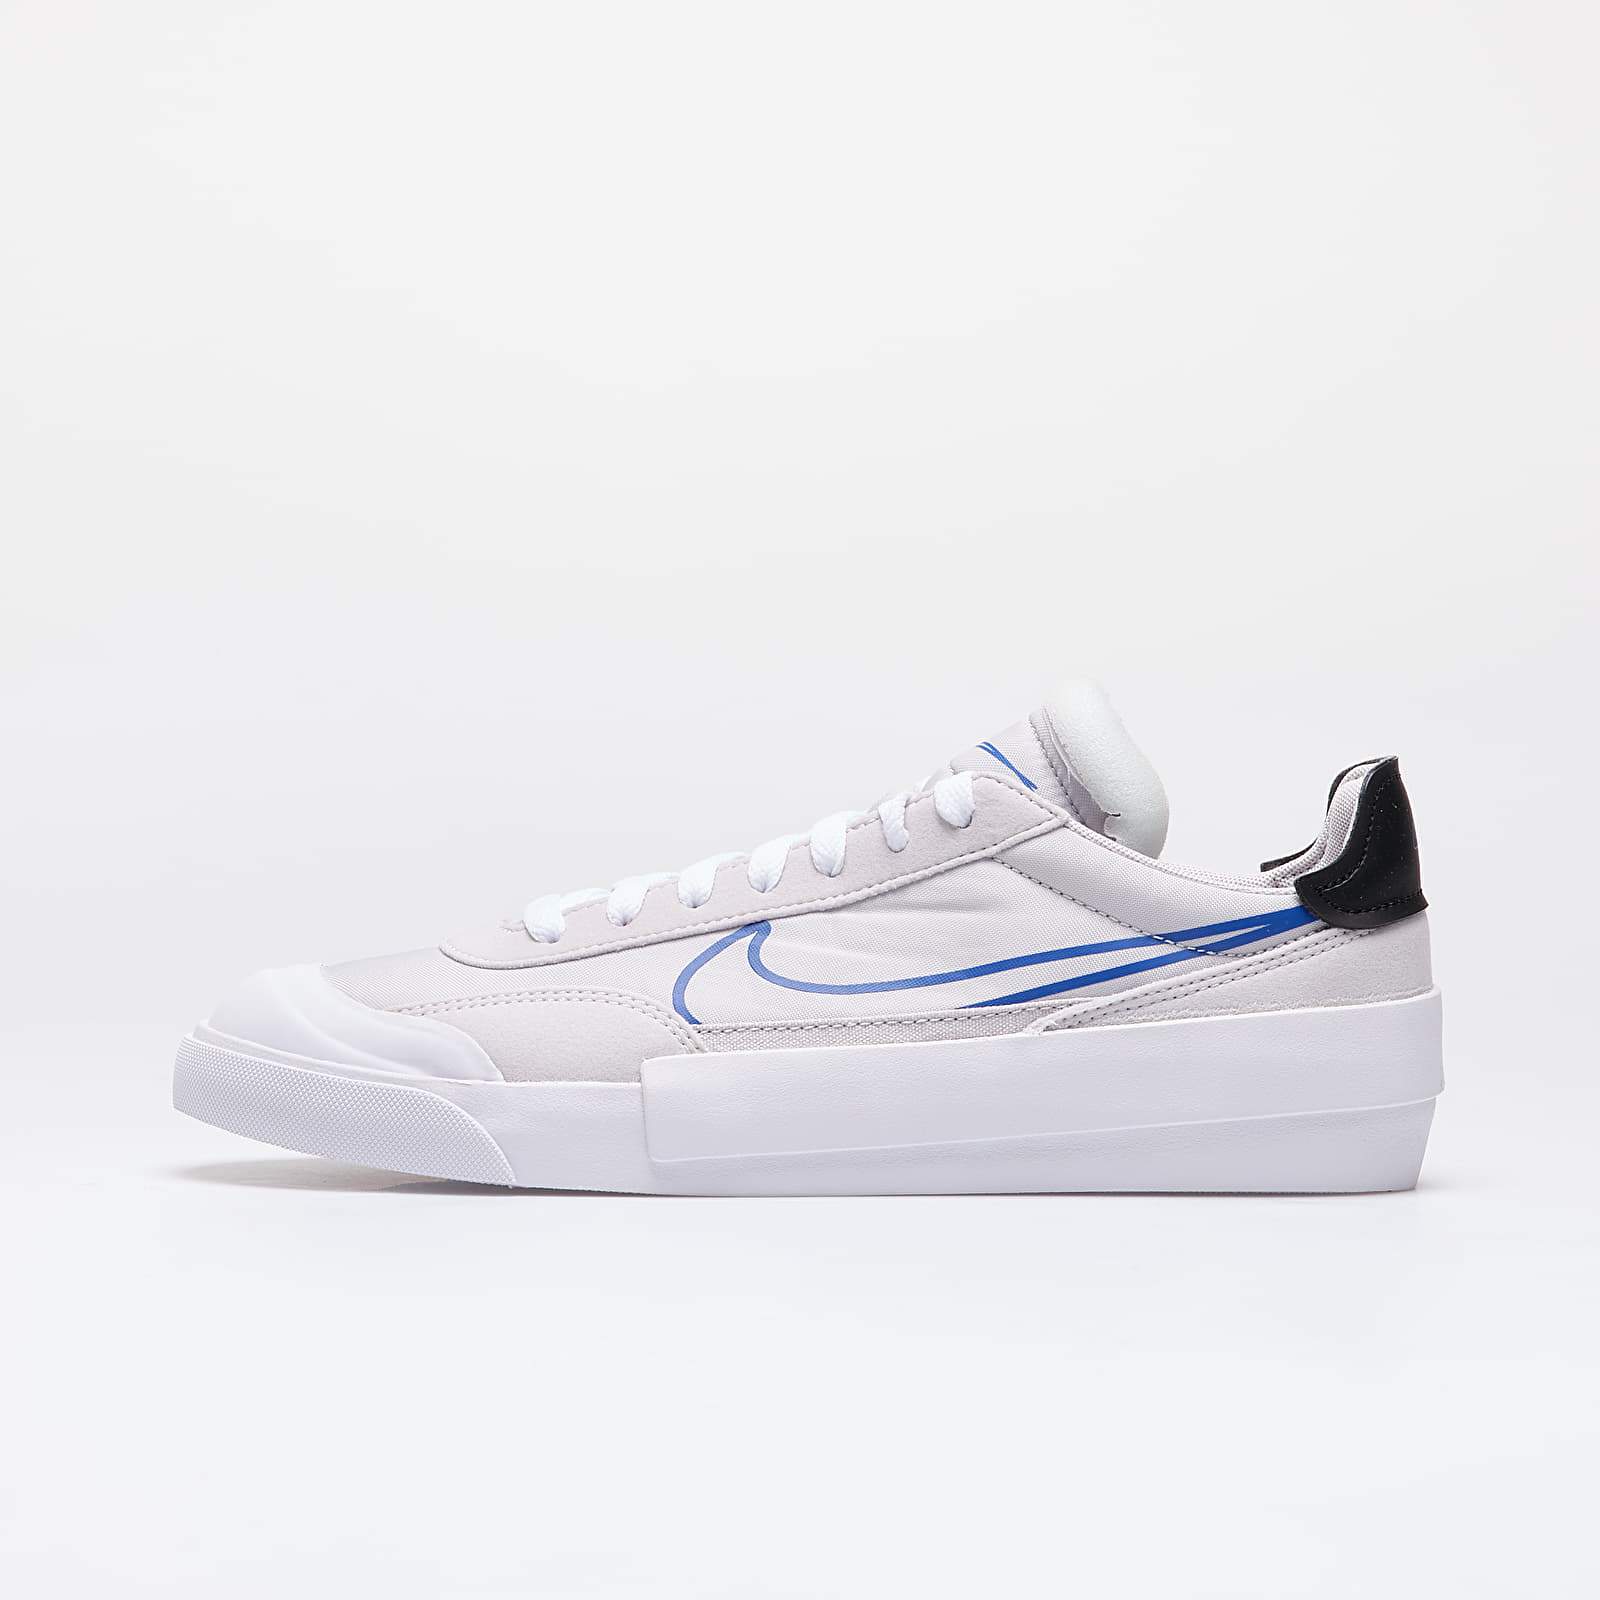 Chaussures et baskets homme Nike Drop-Type Hbr Vast Grey/ Hyper Blue-Black-White